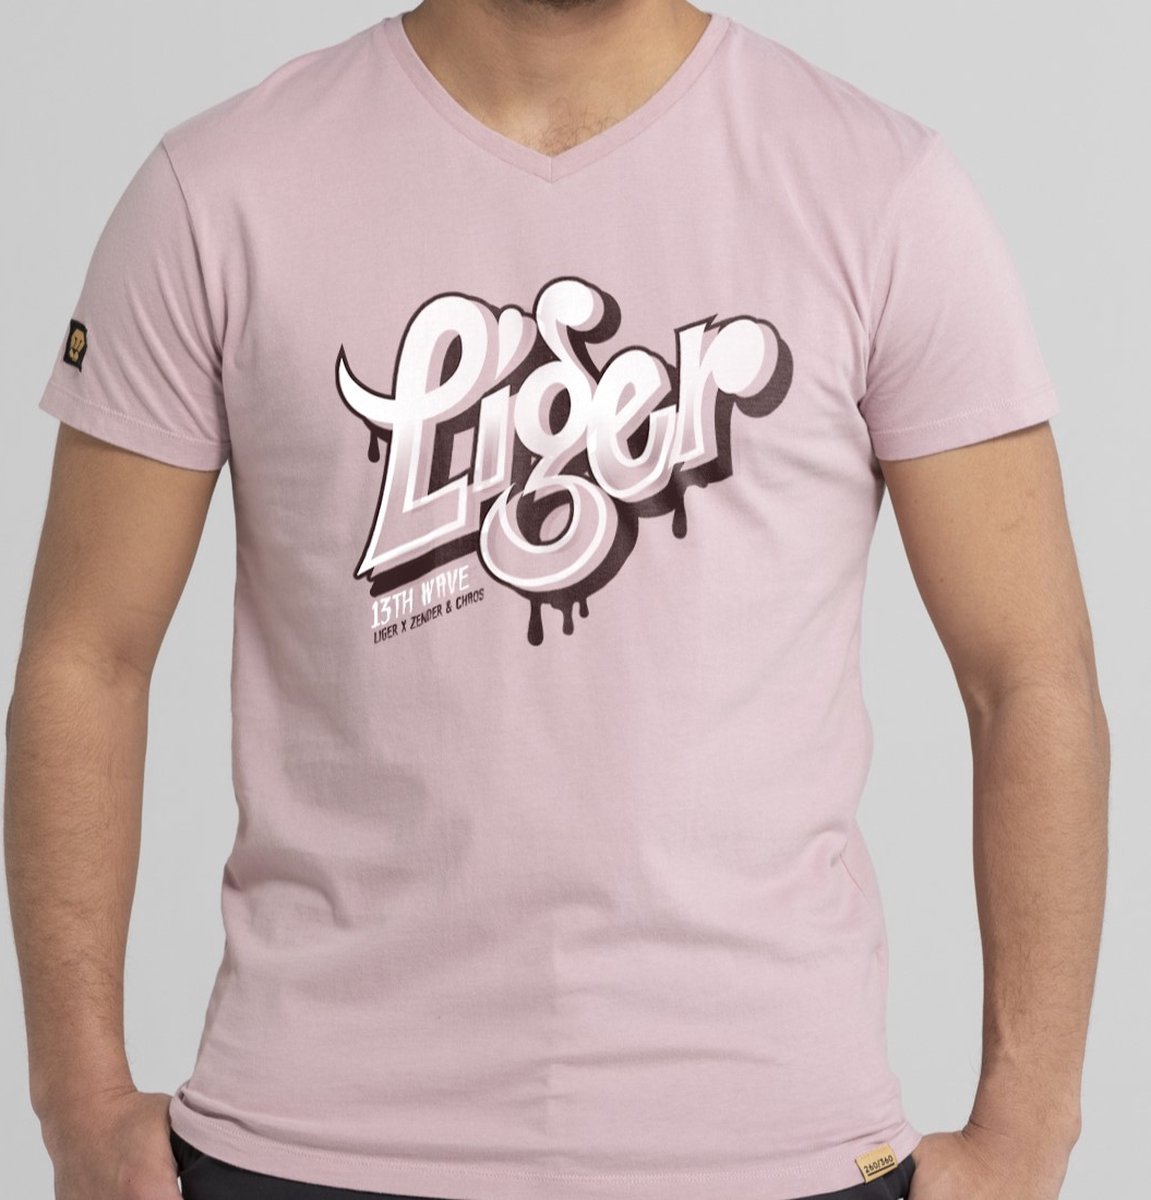 LIGER - Limited Edition van 360 stuks - Zender & Chaos - LIGER typografie - T-Shirt - Maat L